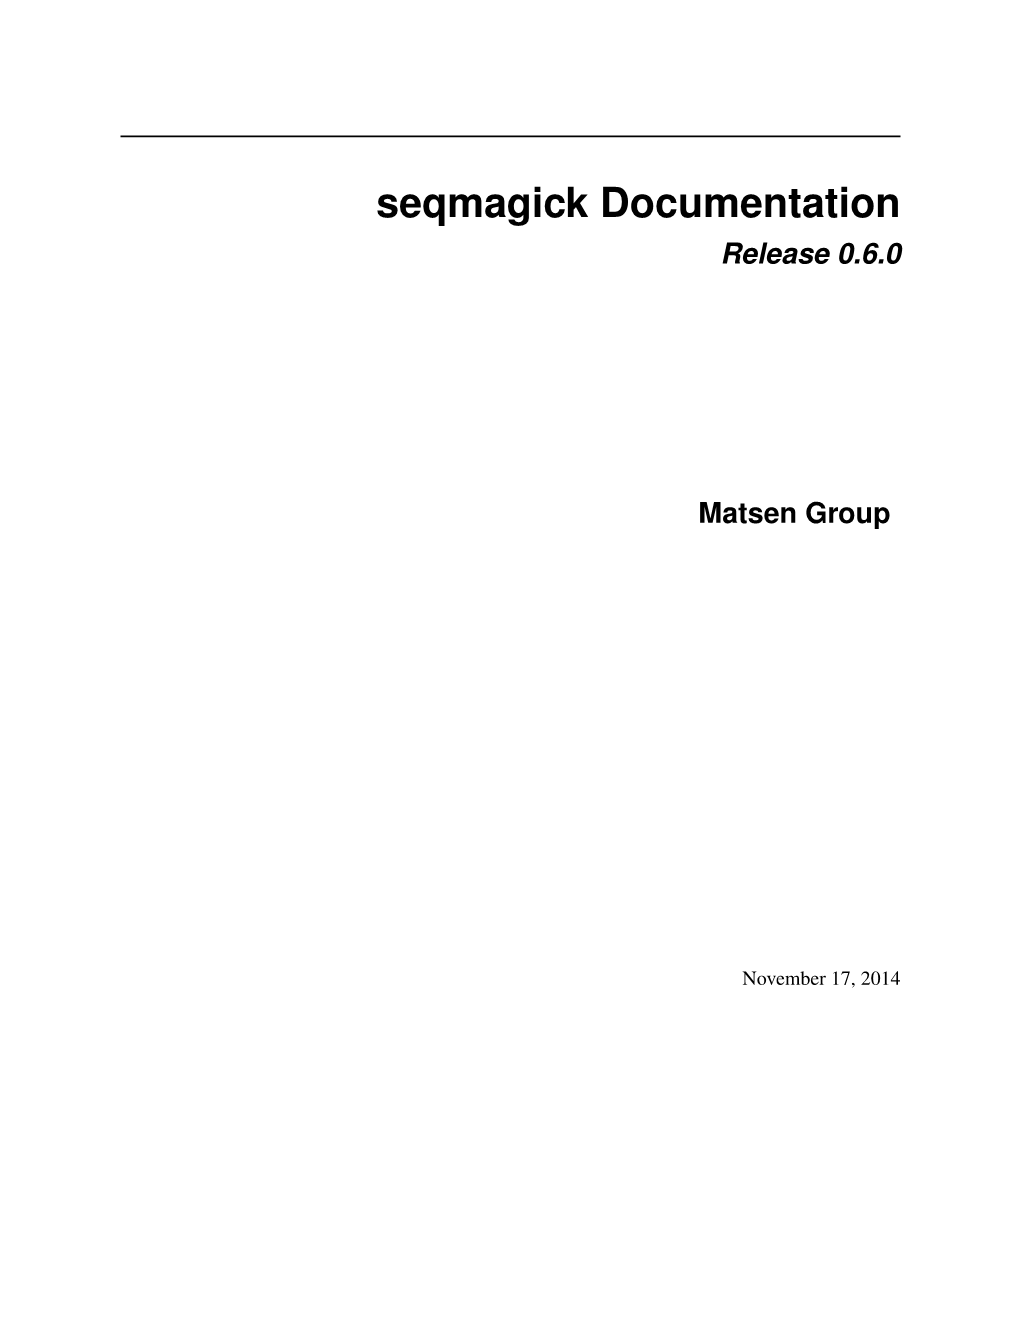 Seqmagick Documentation Release 0.6.0